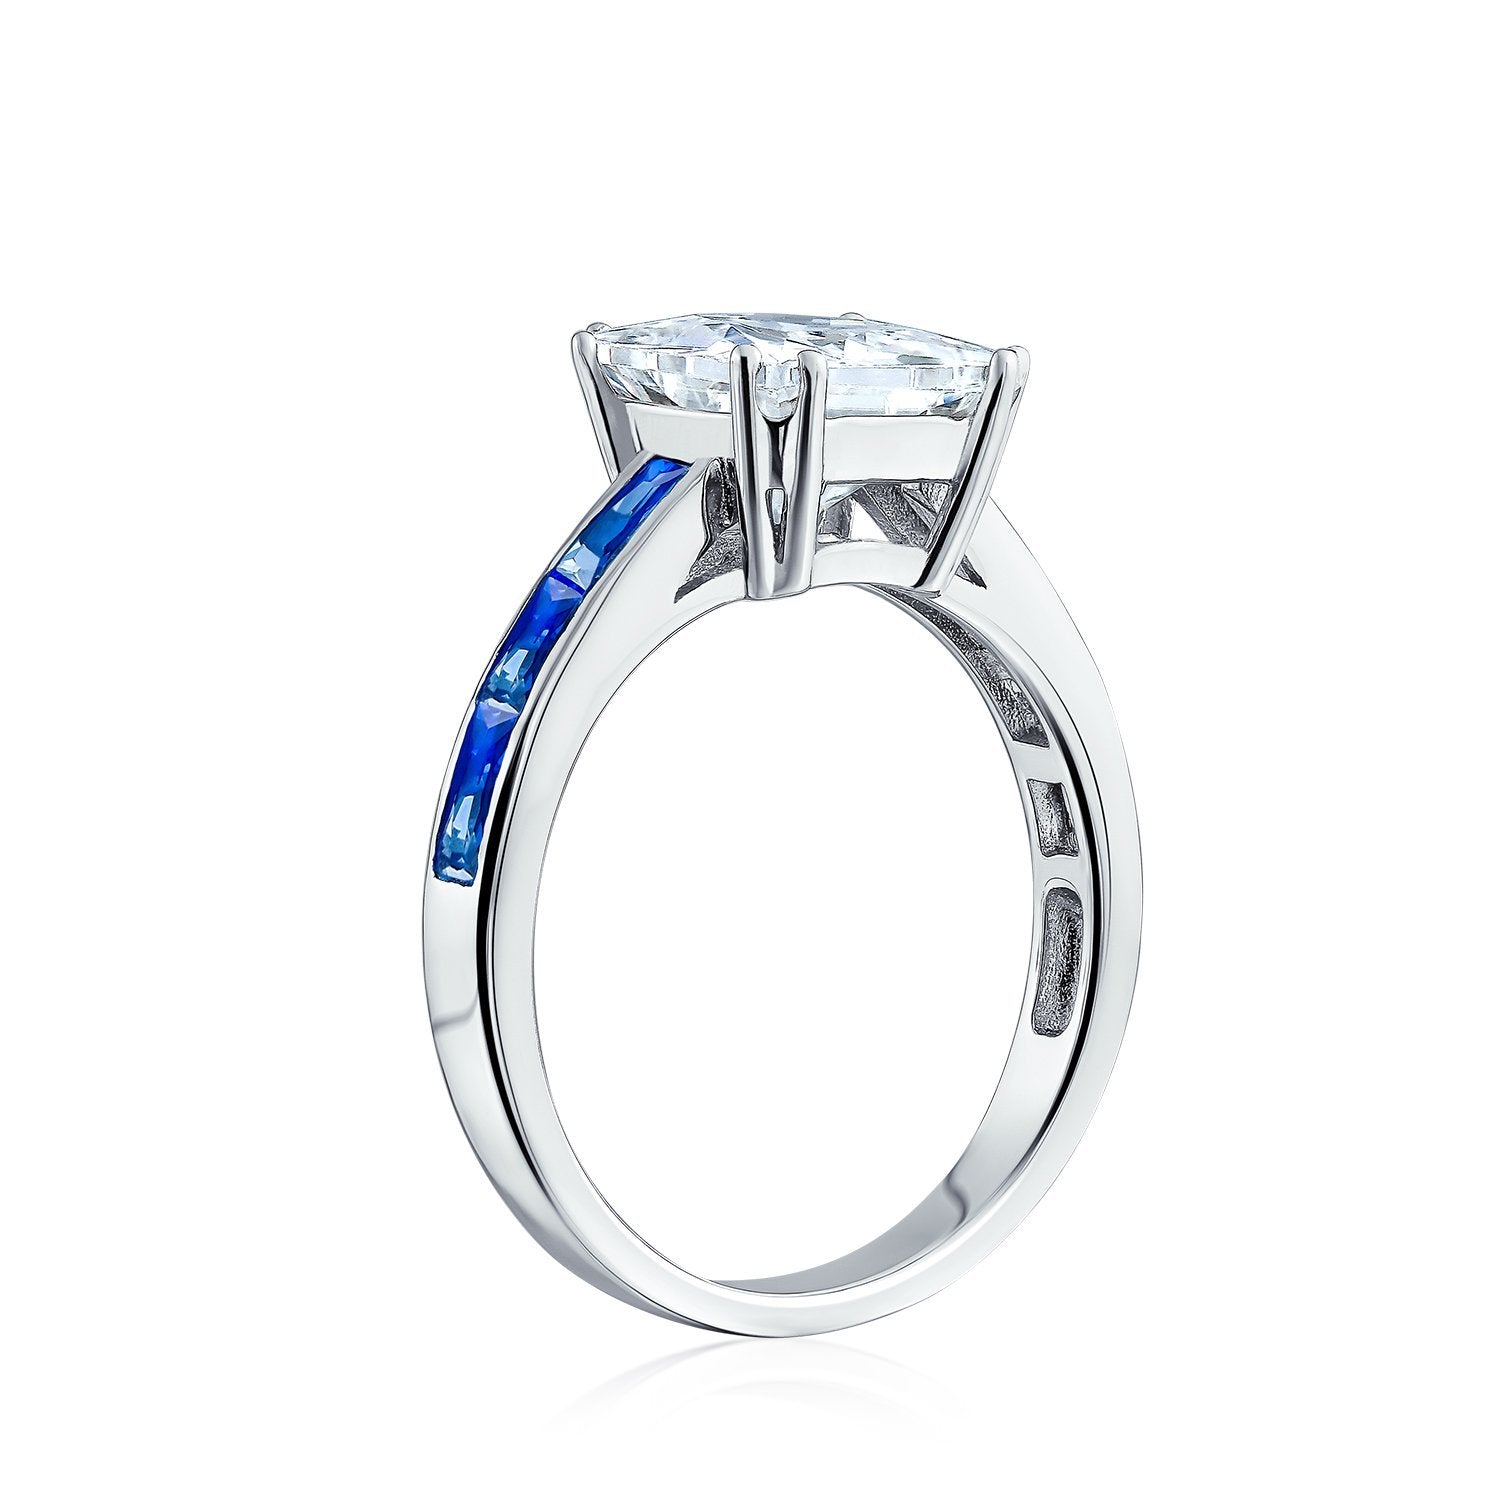 3CT Cushion Cut AAA CZ Engagement Ring Imitation Sapphire 925 Silver - Joyeria Lady